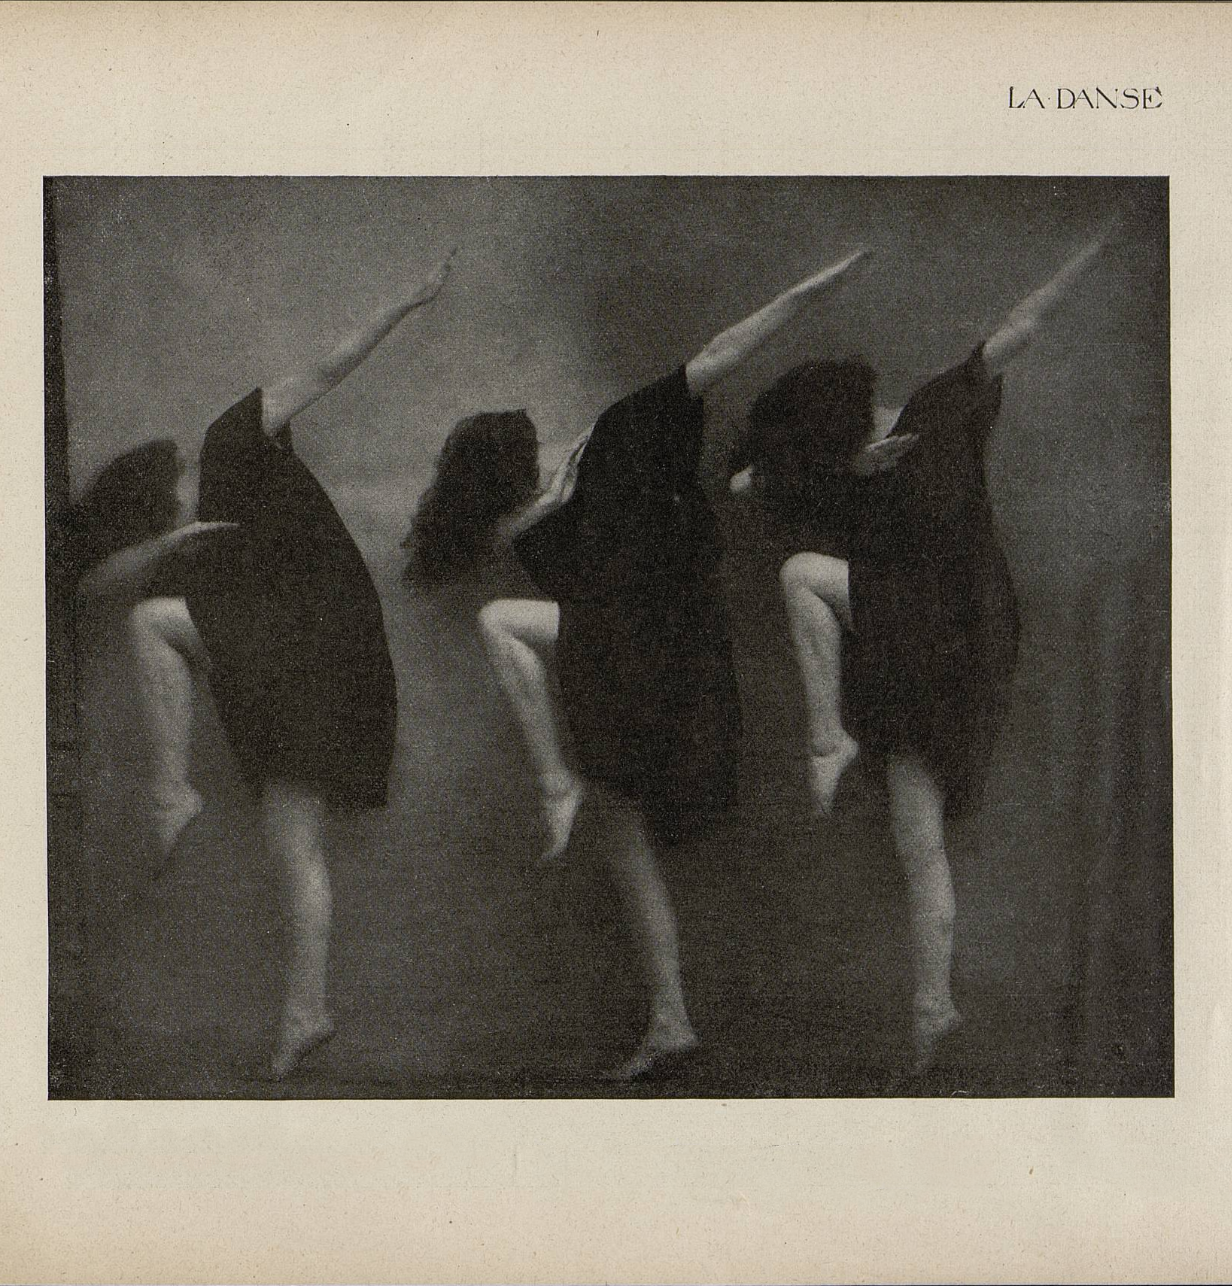 Irène Popard. La Gymnastique Harmonique. La Danse, Mars 1922 | src CND